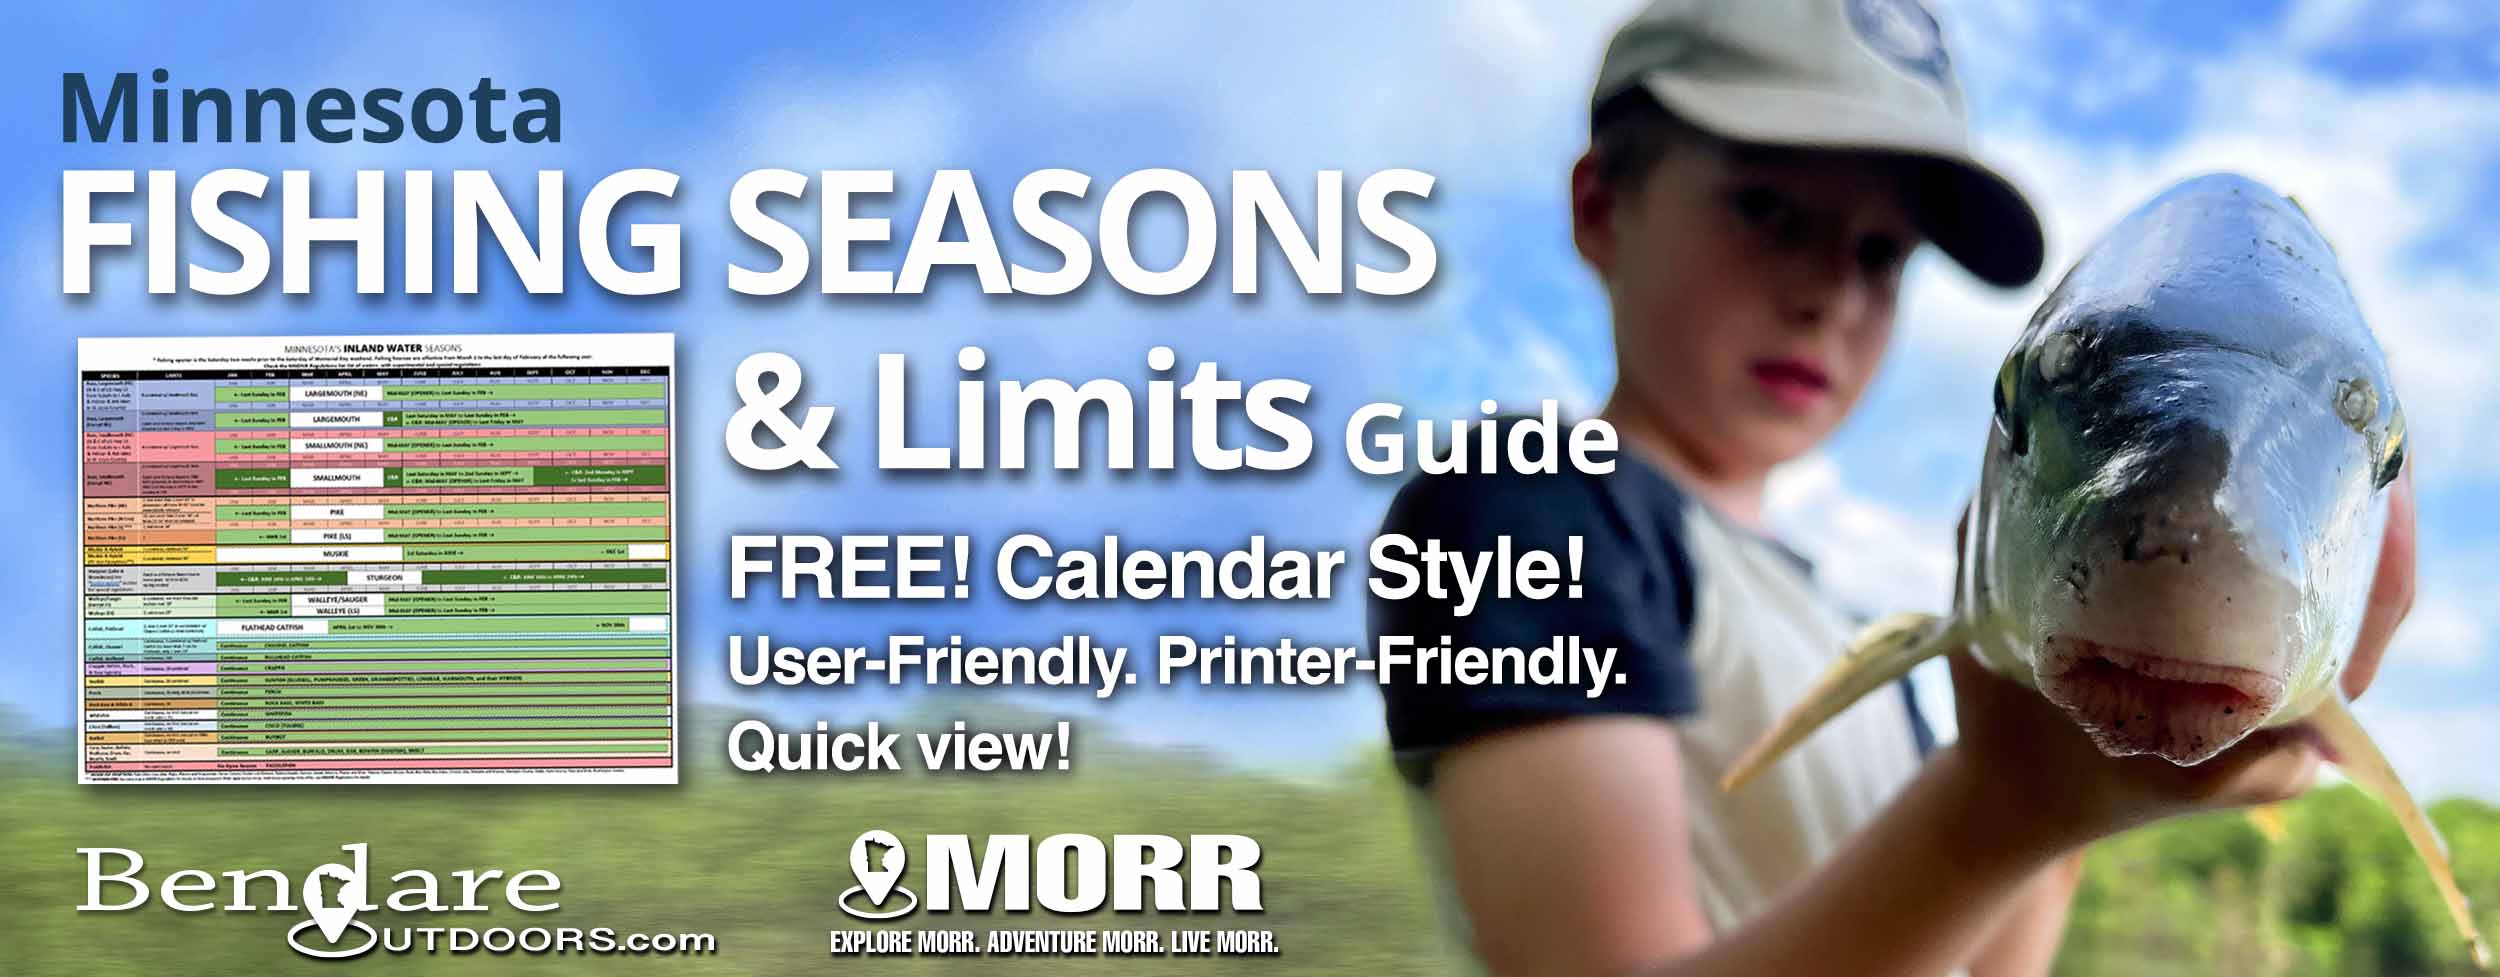 Minnesota Fishing Seasons and Limits by Bendare Outdoors